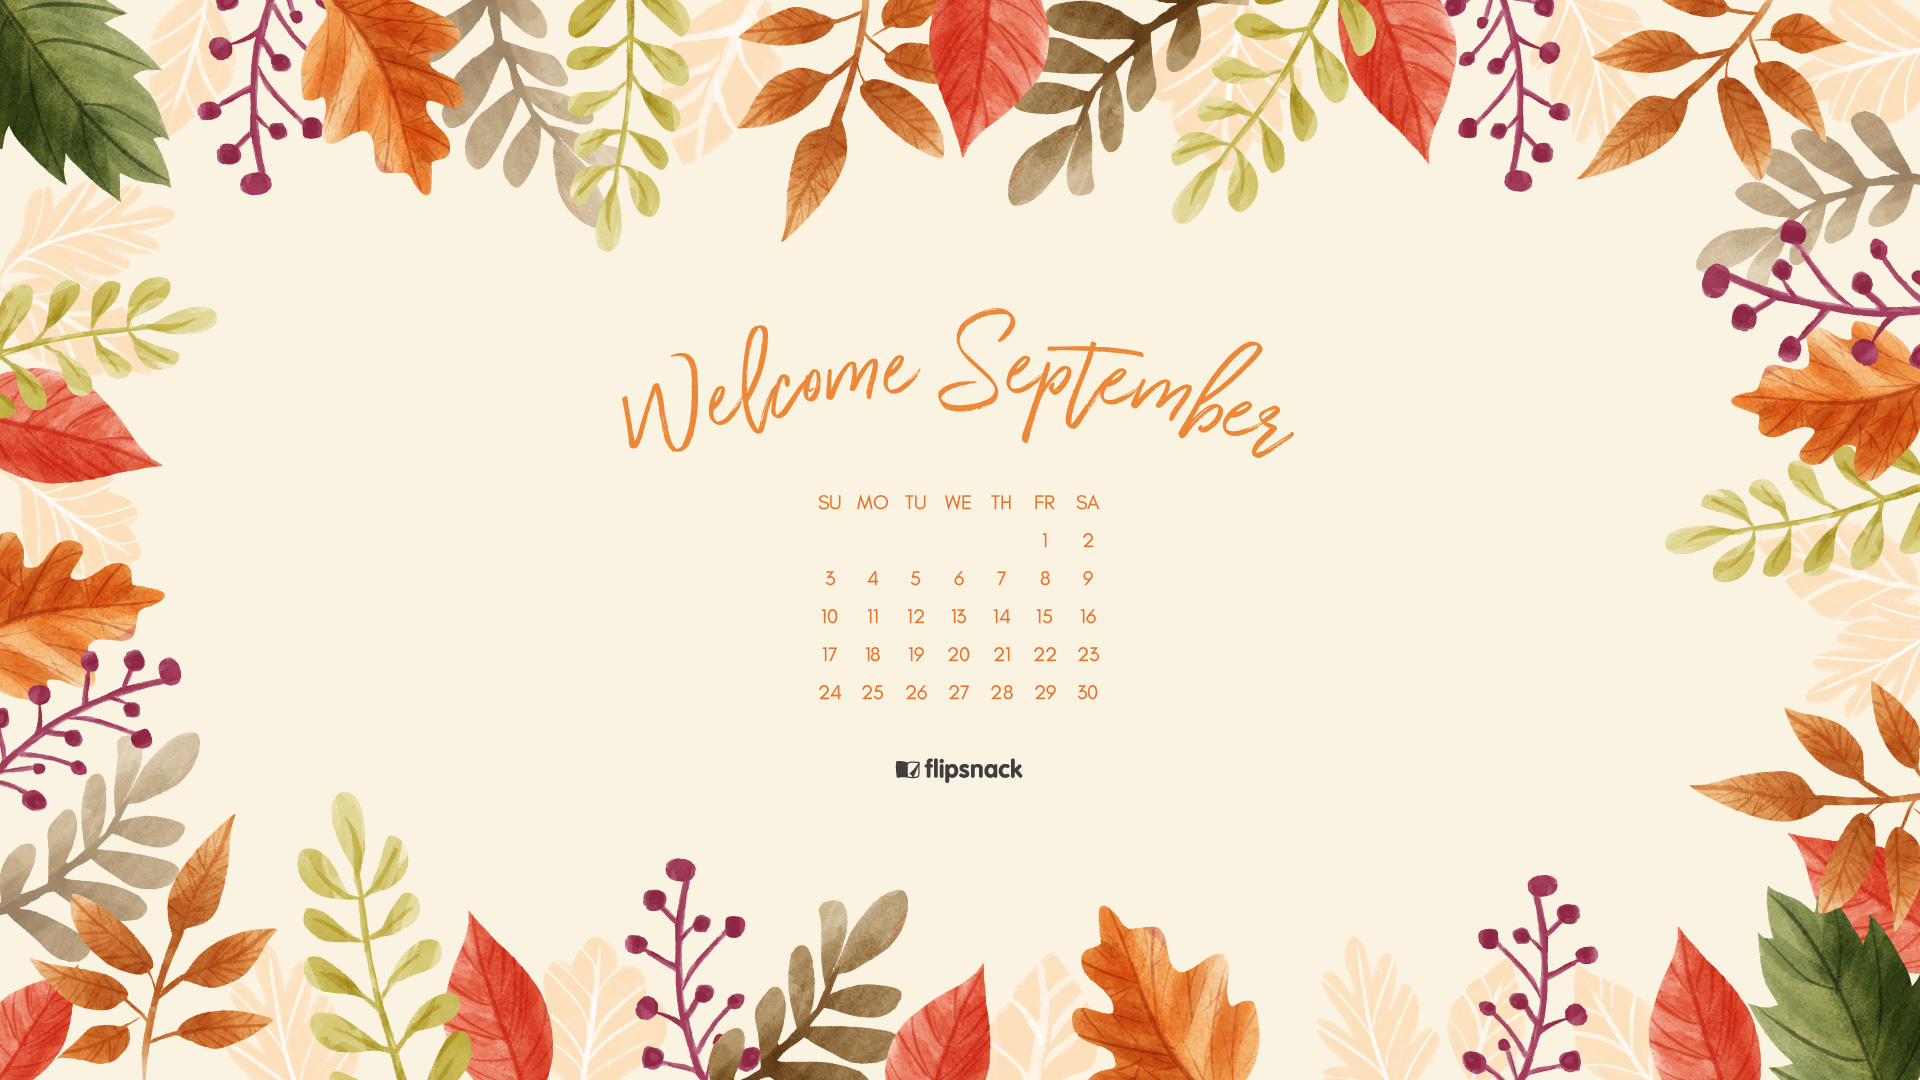 Your September Calendar Wallpaper Is Here Get It